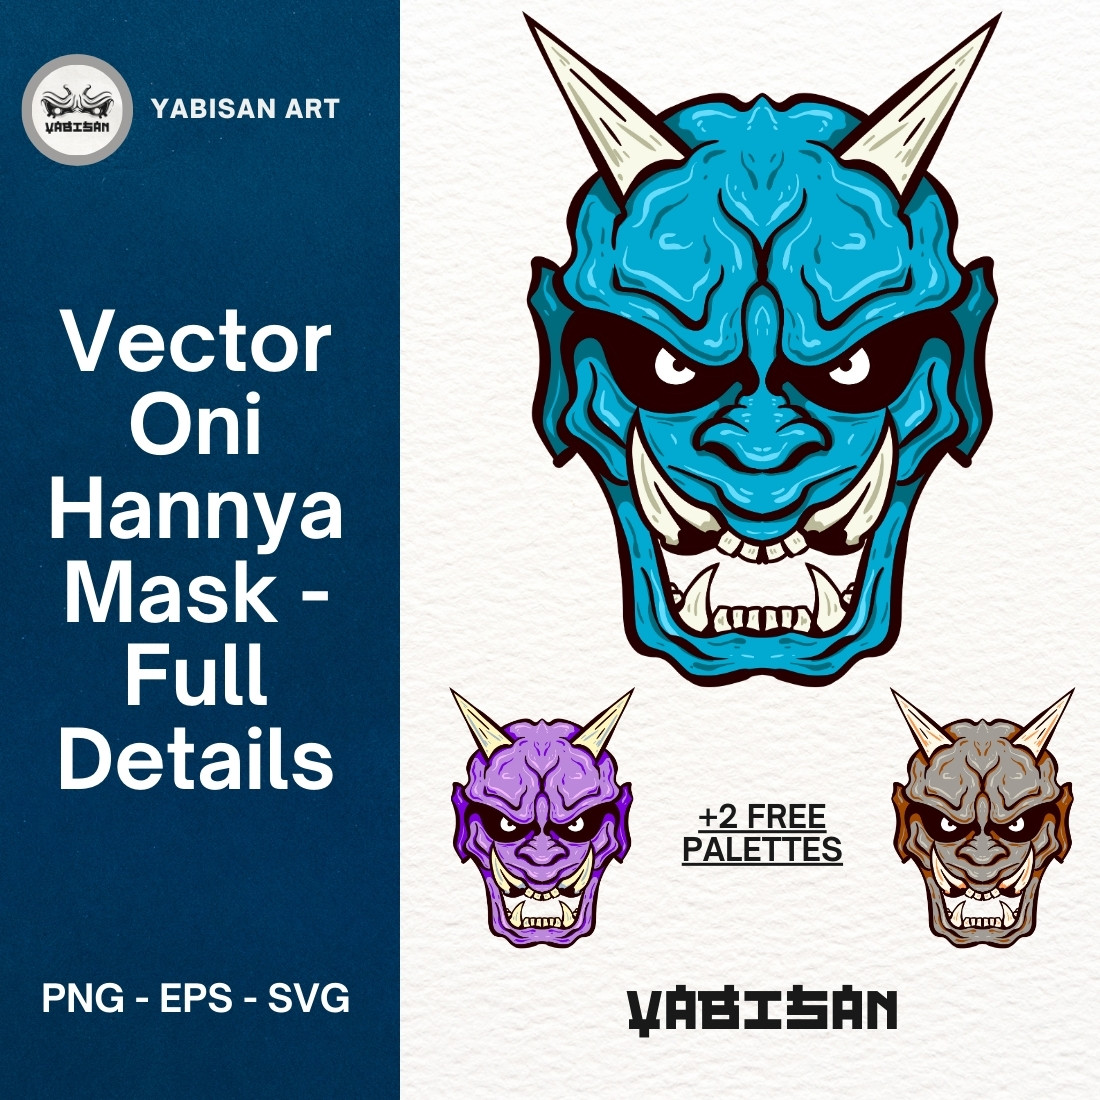 Oni Hannya Mask art 1 - Full Details preview image.